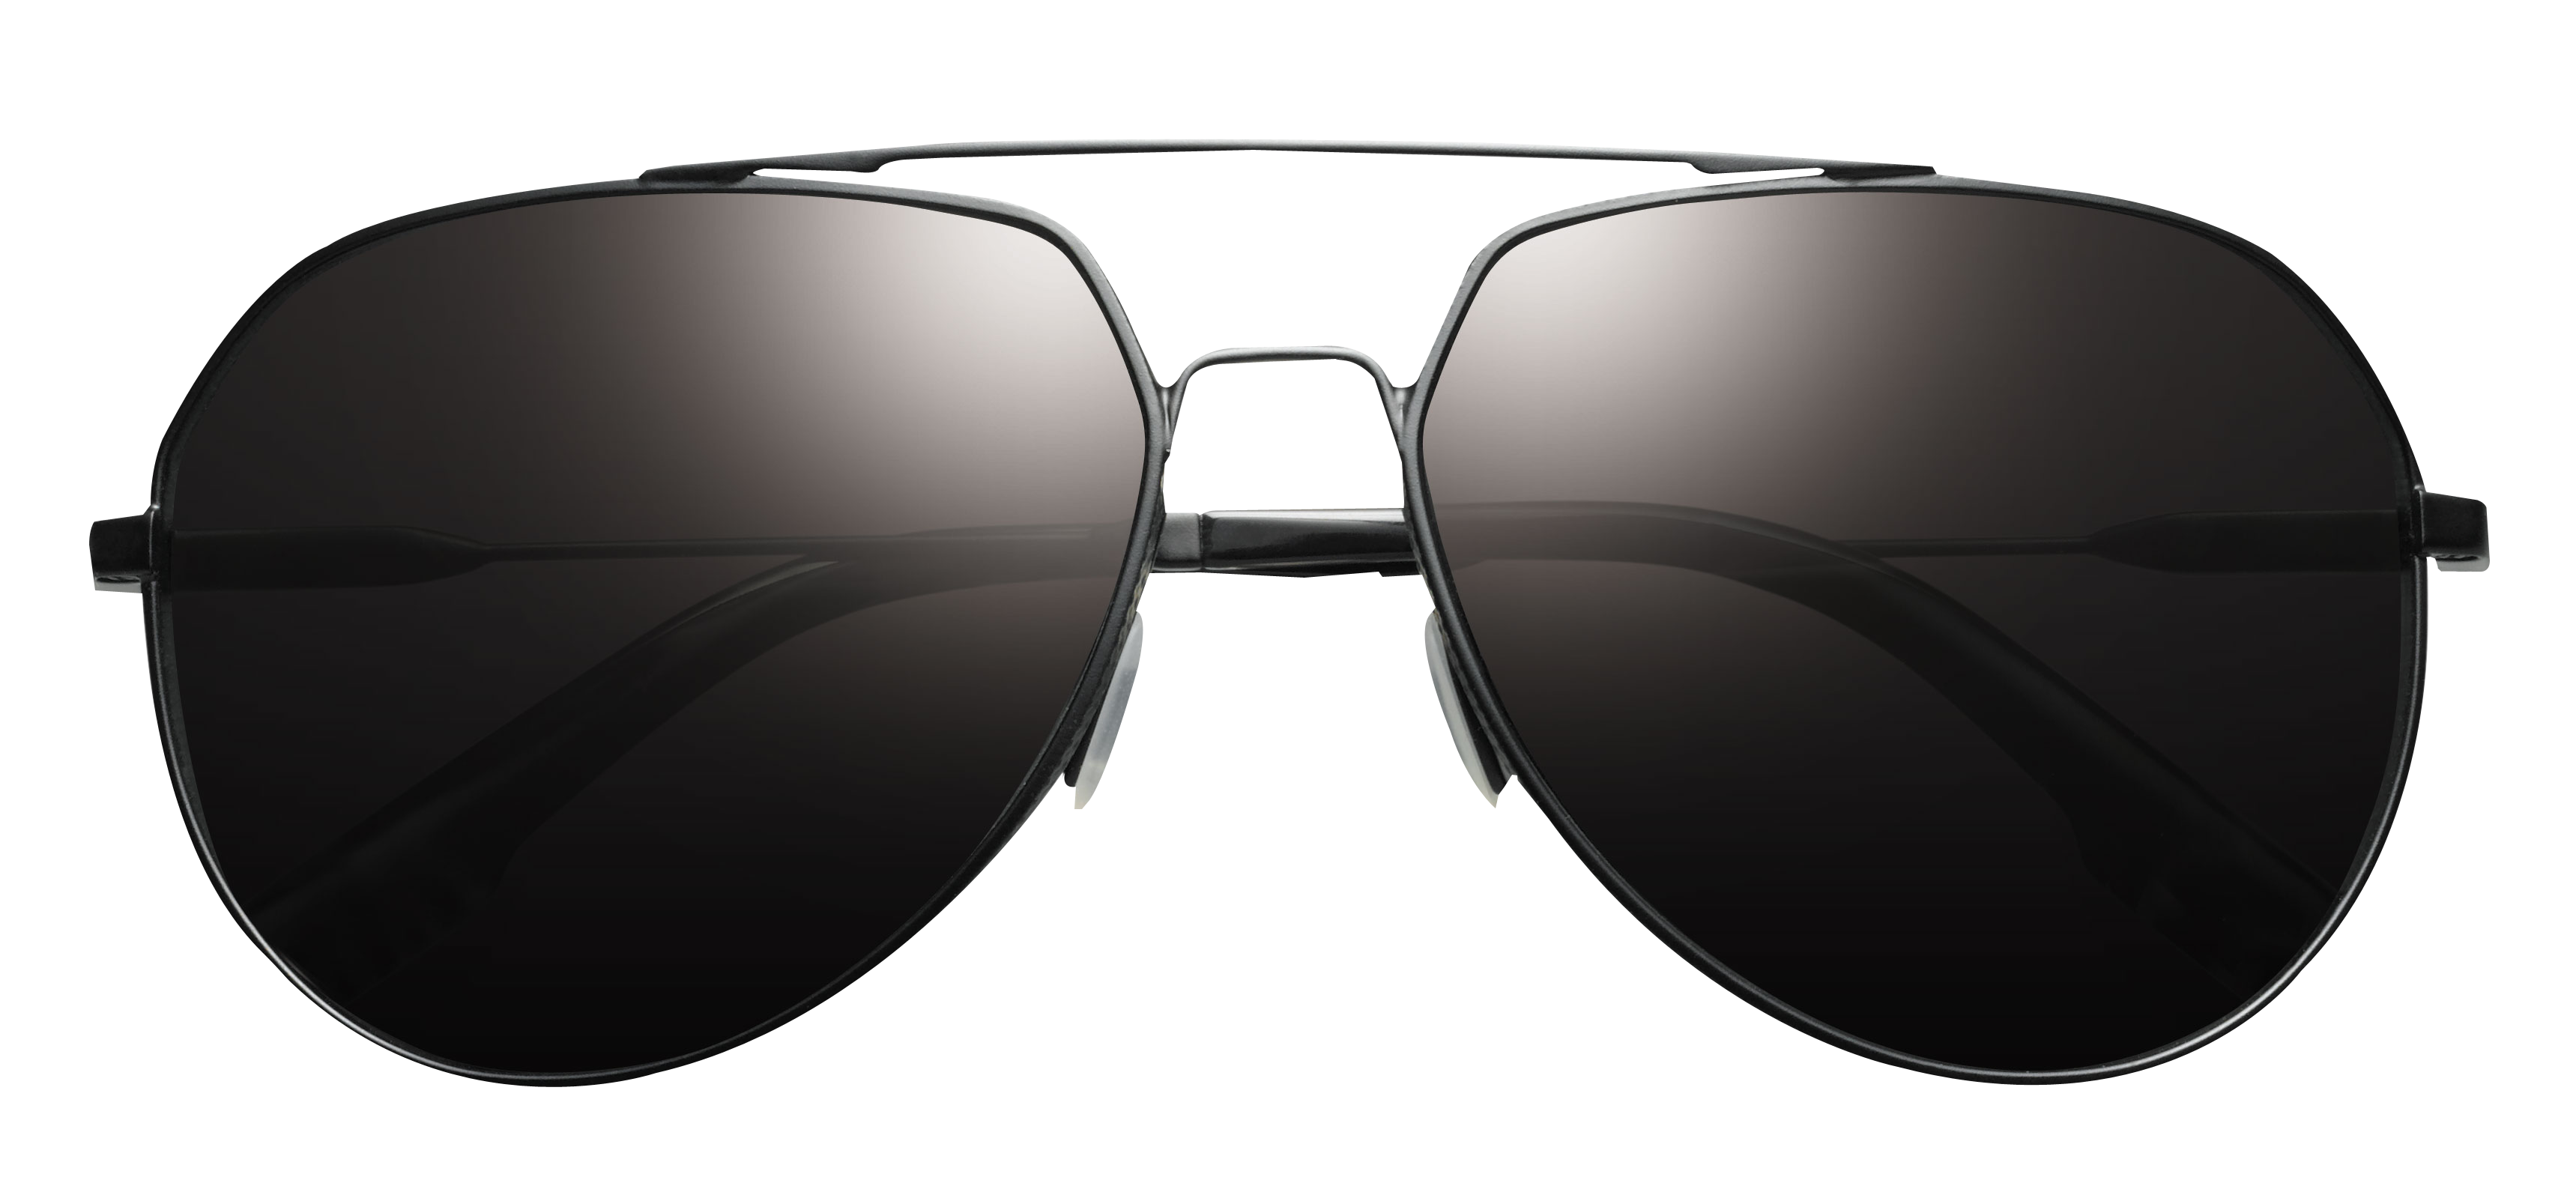 Sunglasses Aviator Free Clipart HQ Clipart